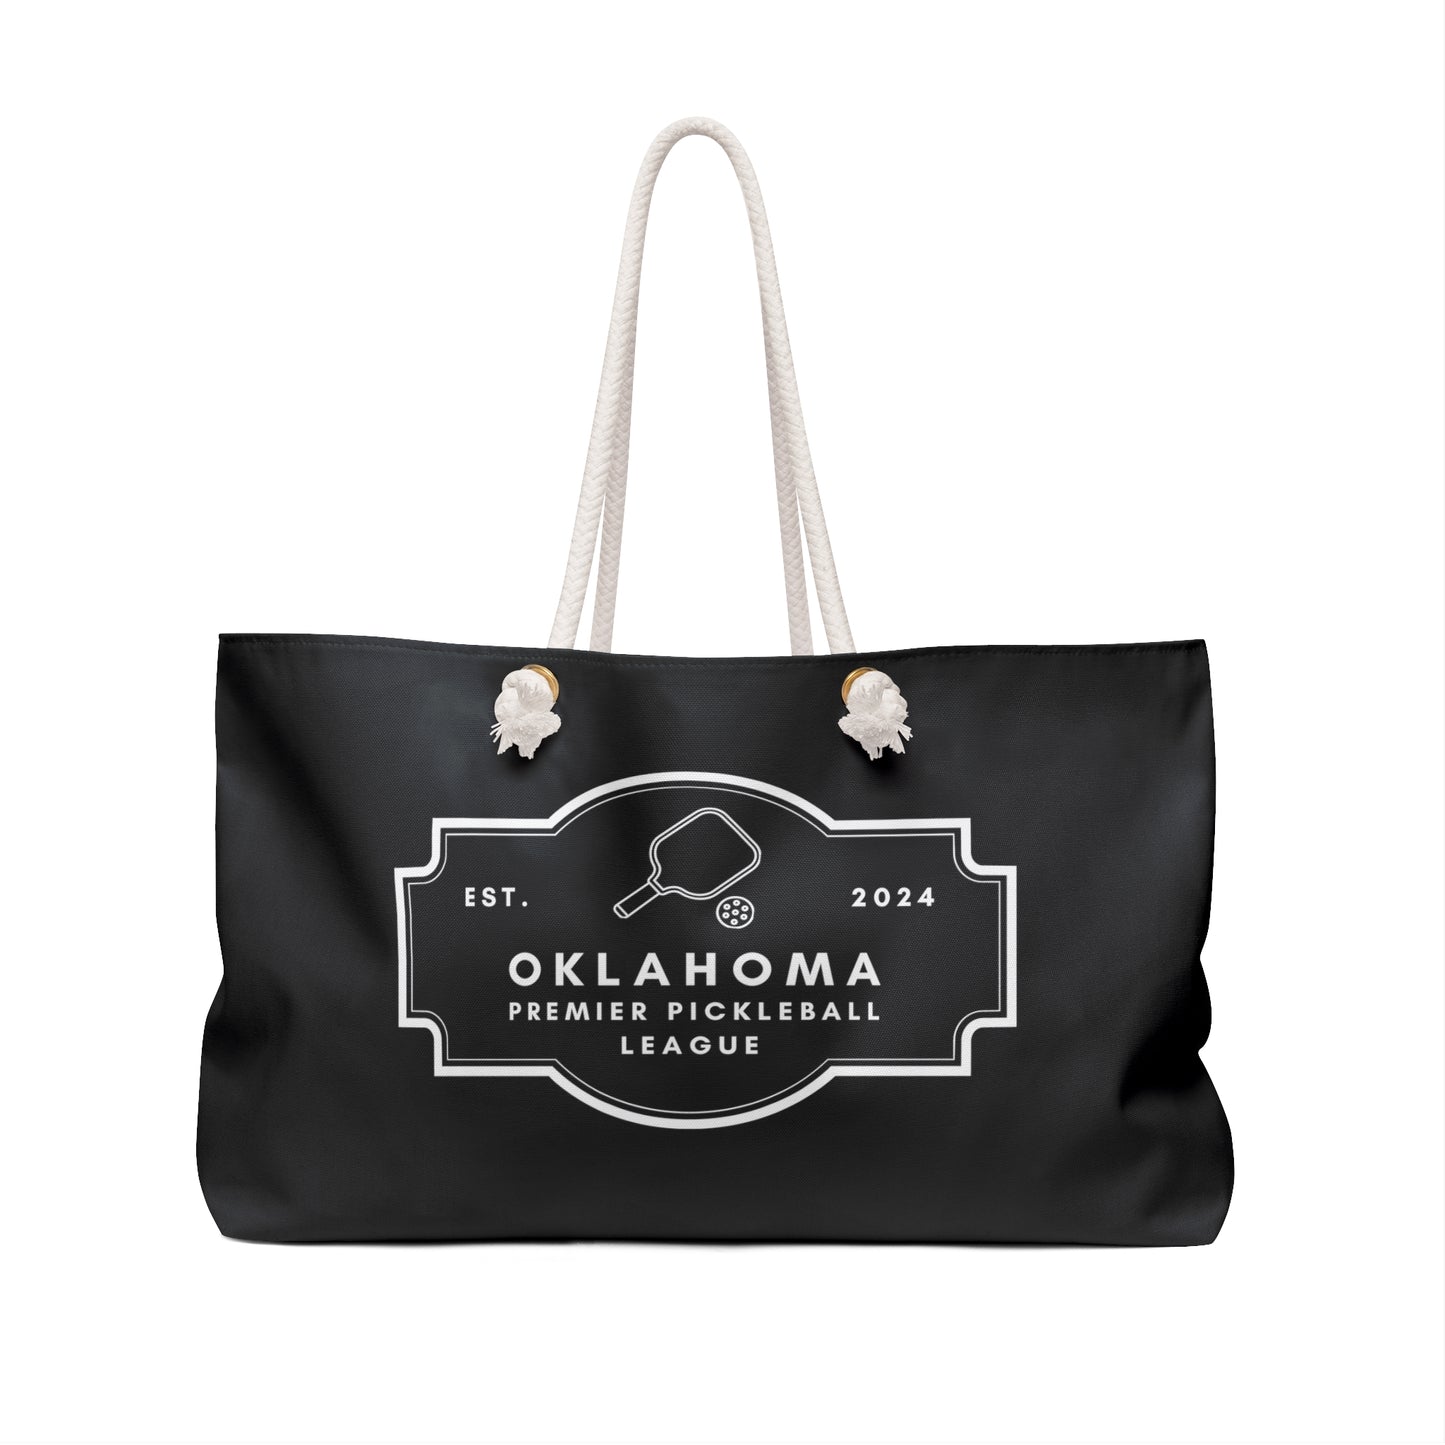 Customize your OPPL Pickleball Weekender Bag